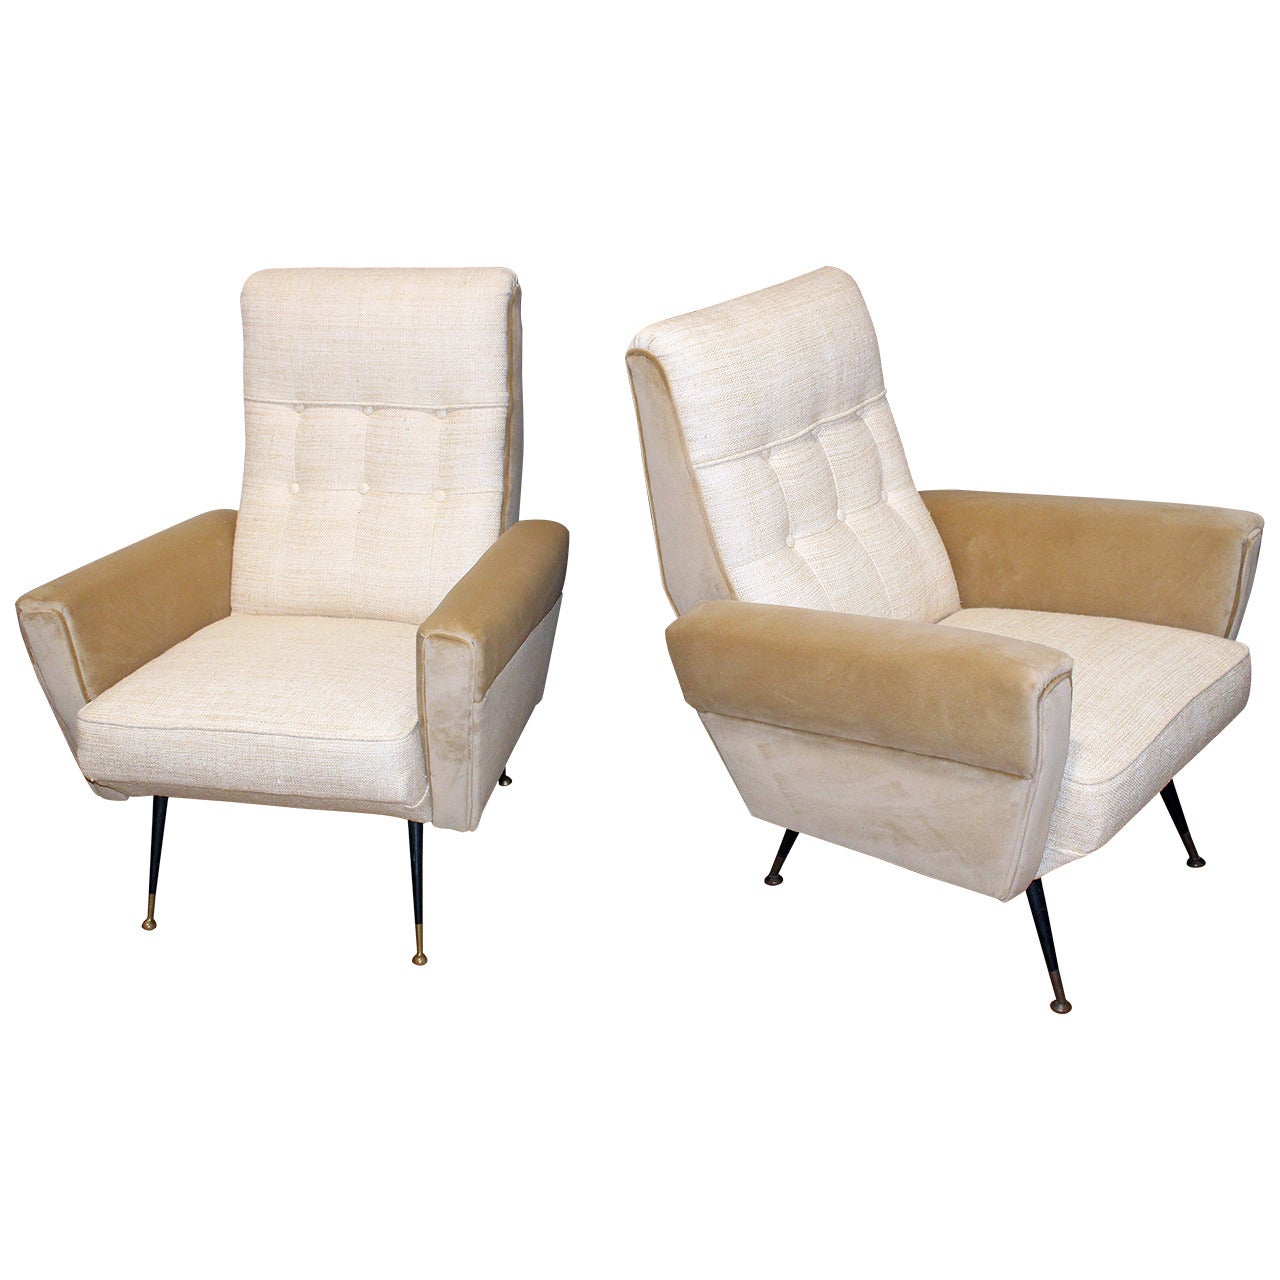 Italian 1950s Chairs